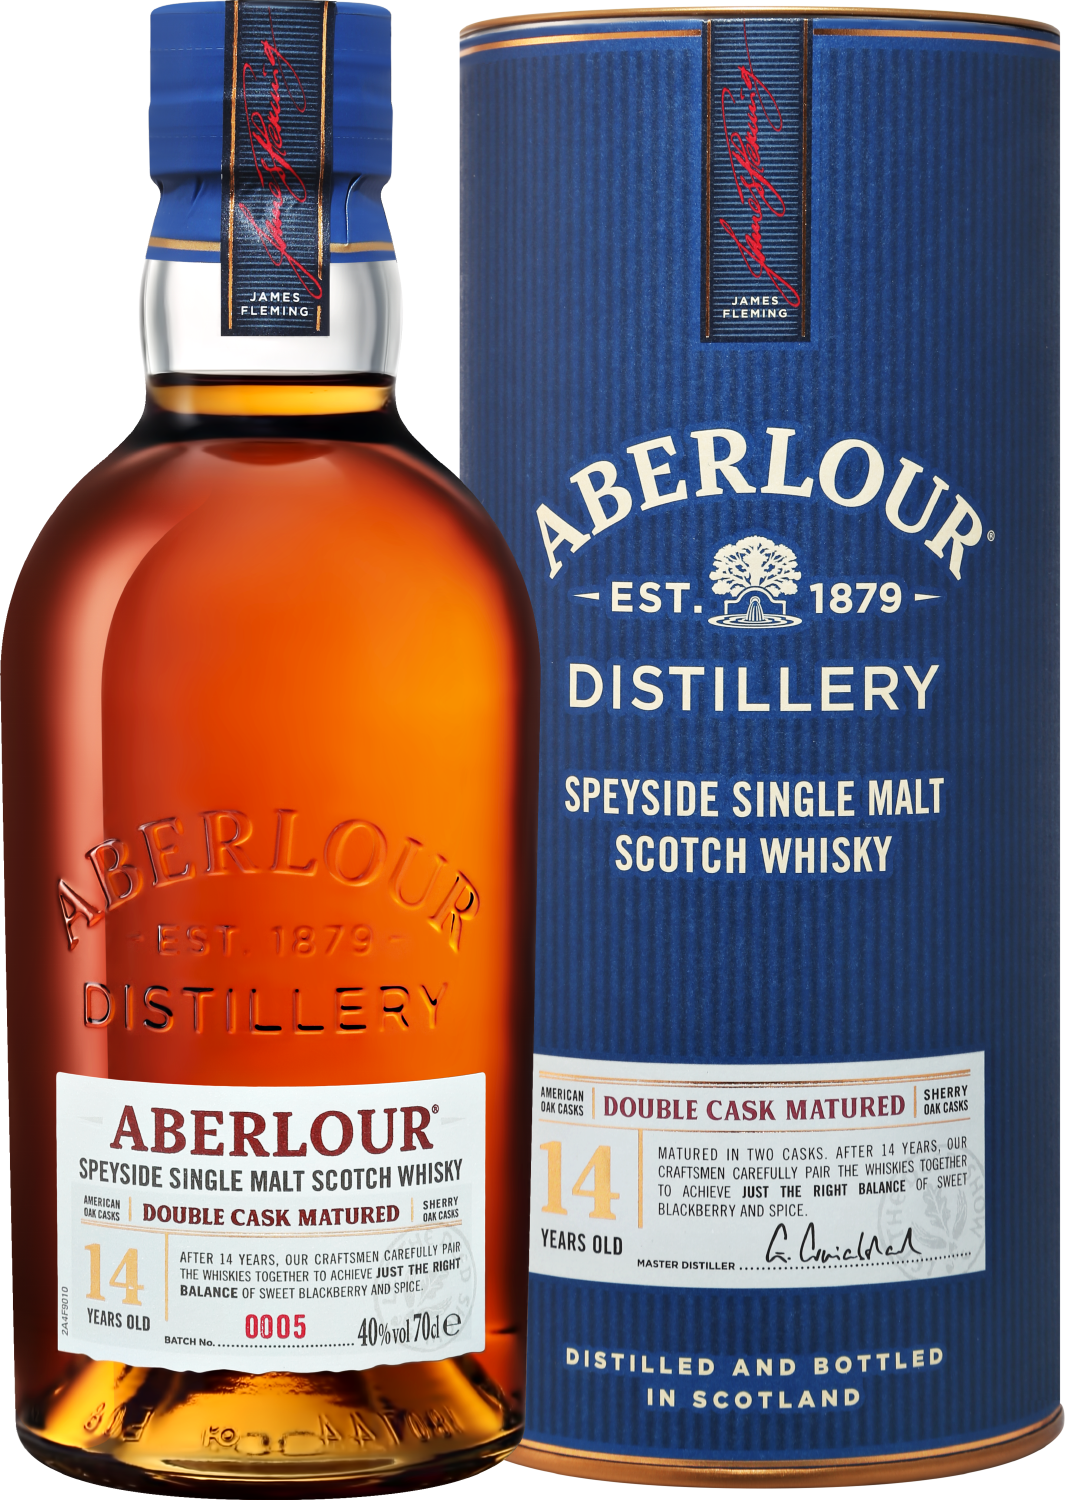 Aberlour Double Cask Matured Speyside Single Malt Scotch Whisky 14 y.o. (gift box)